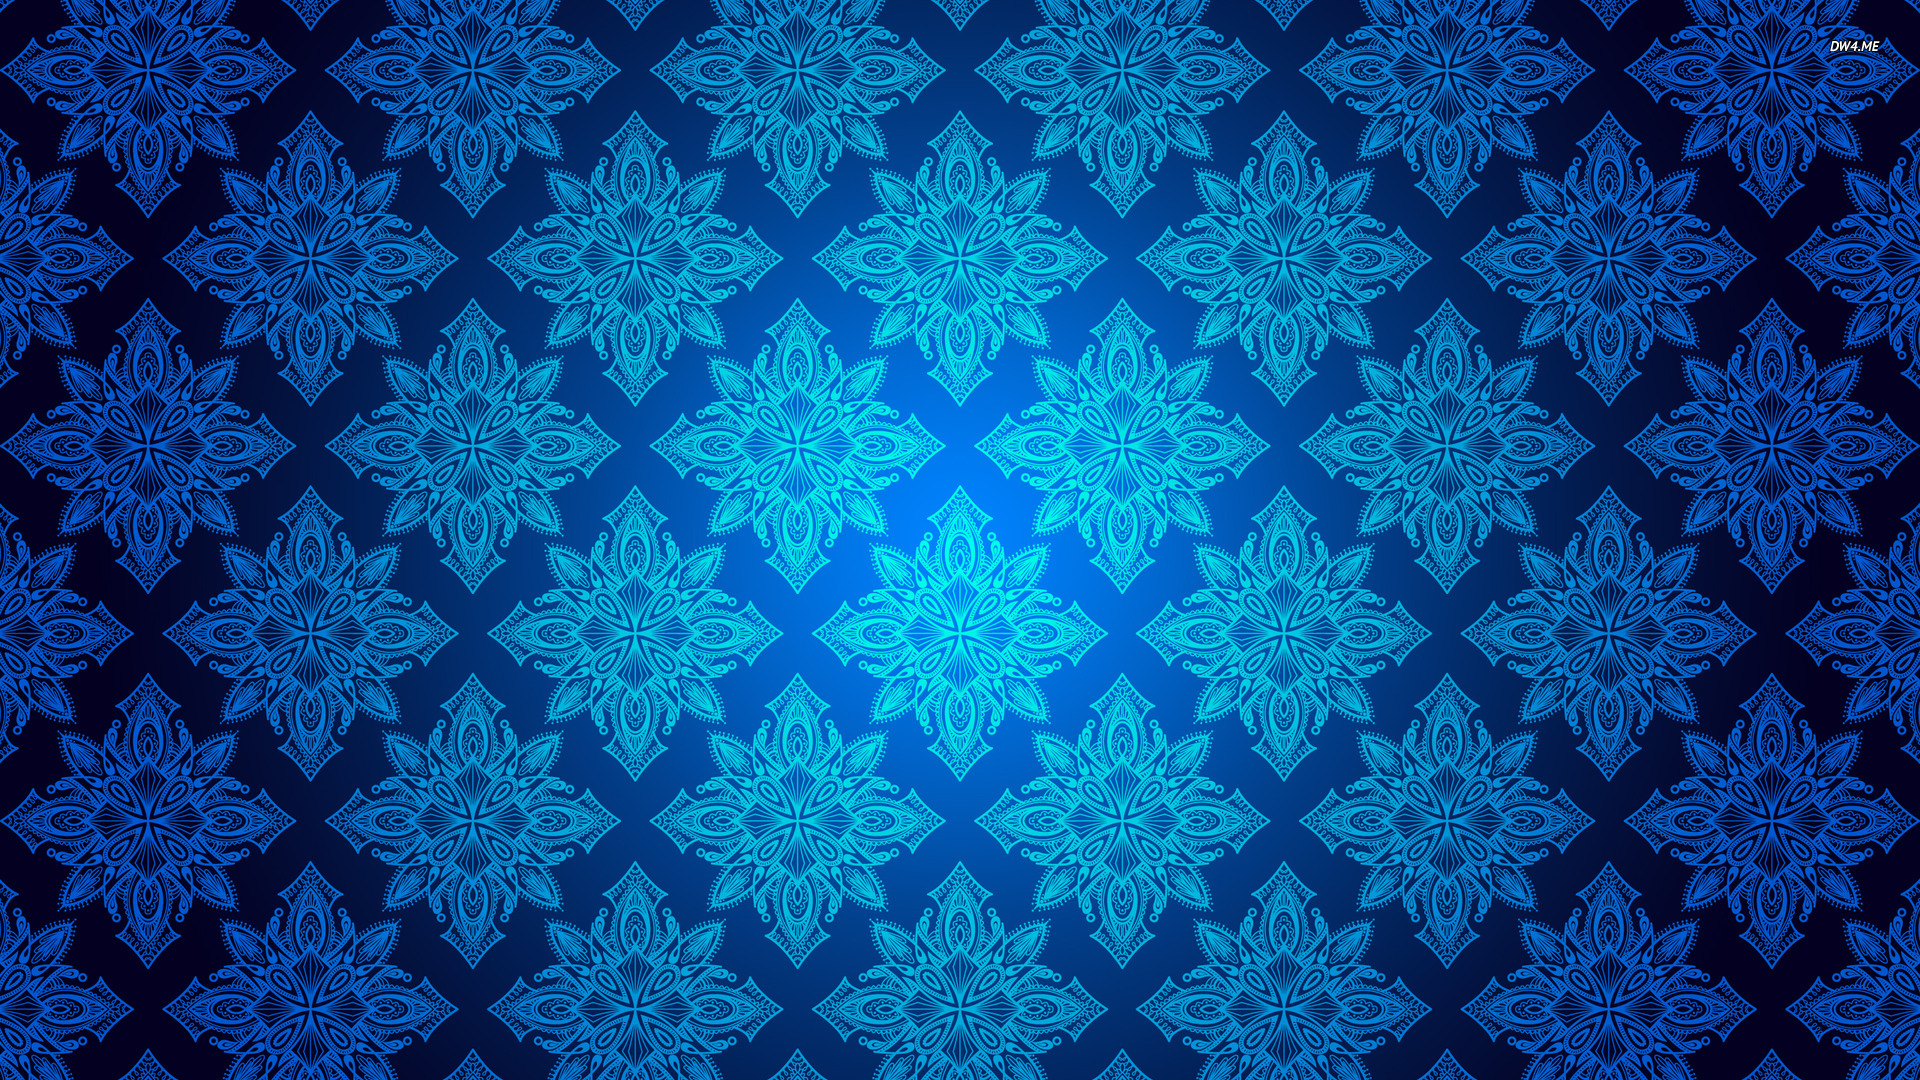 Free download Blue vintage pattern wallpaper Vector wallpaper 864 [1920x1080] for your Desktop, Mobile & Tablet. Explore Royal Blue Wallpaper Designs. Blue and White Wallpaper Designs, Blue Wallpaper for